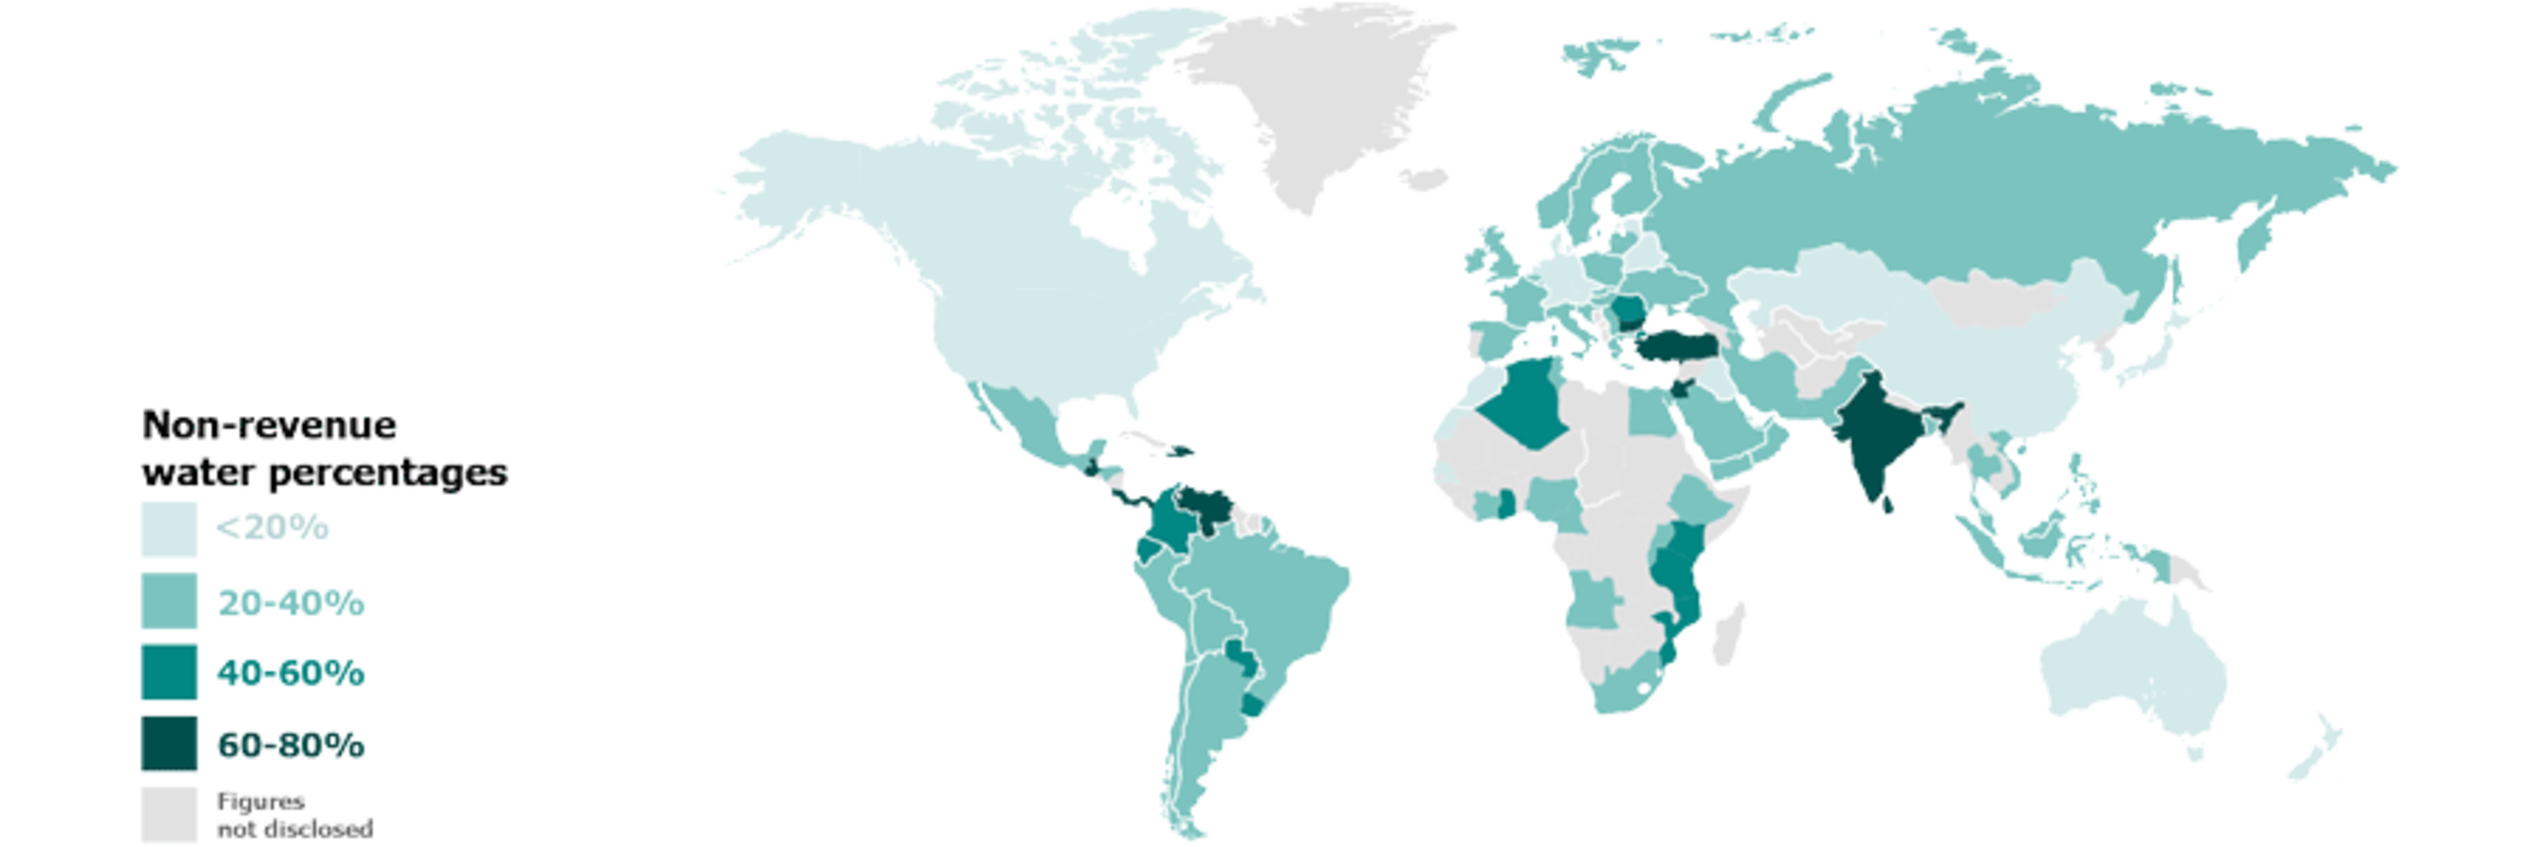 Non-Revenue water percentages around the world